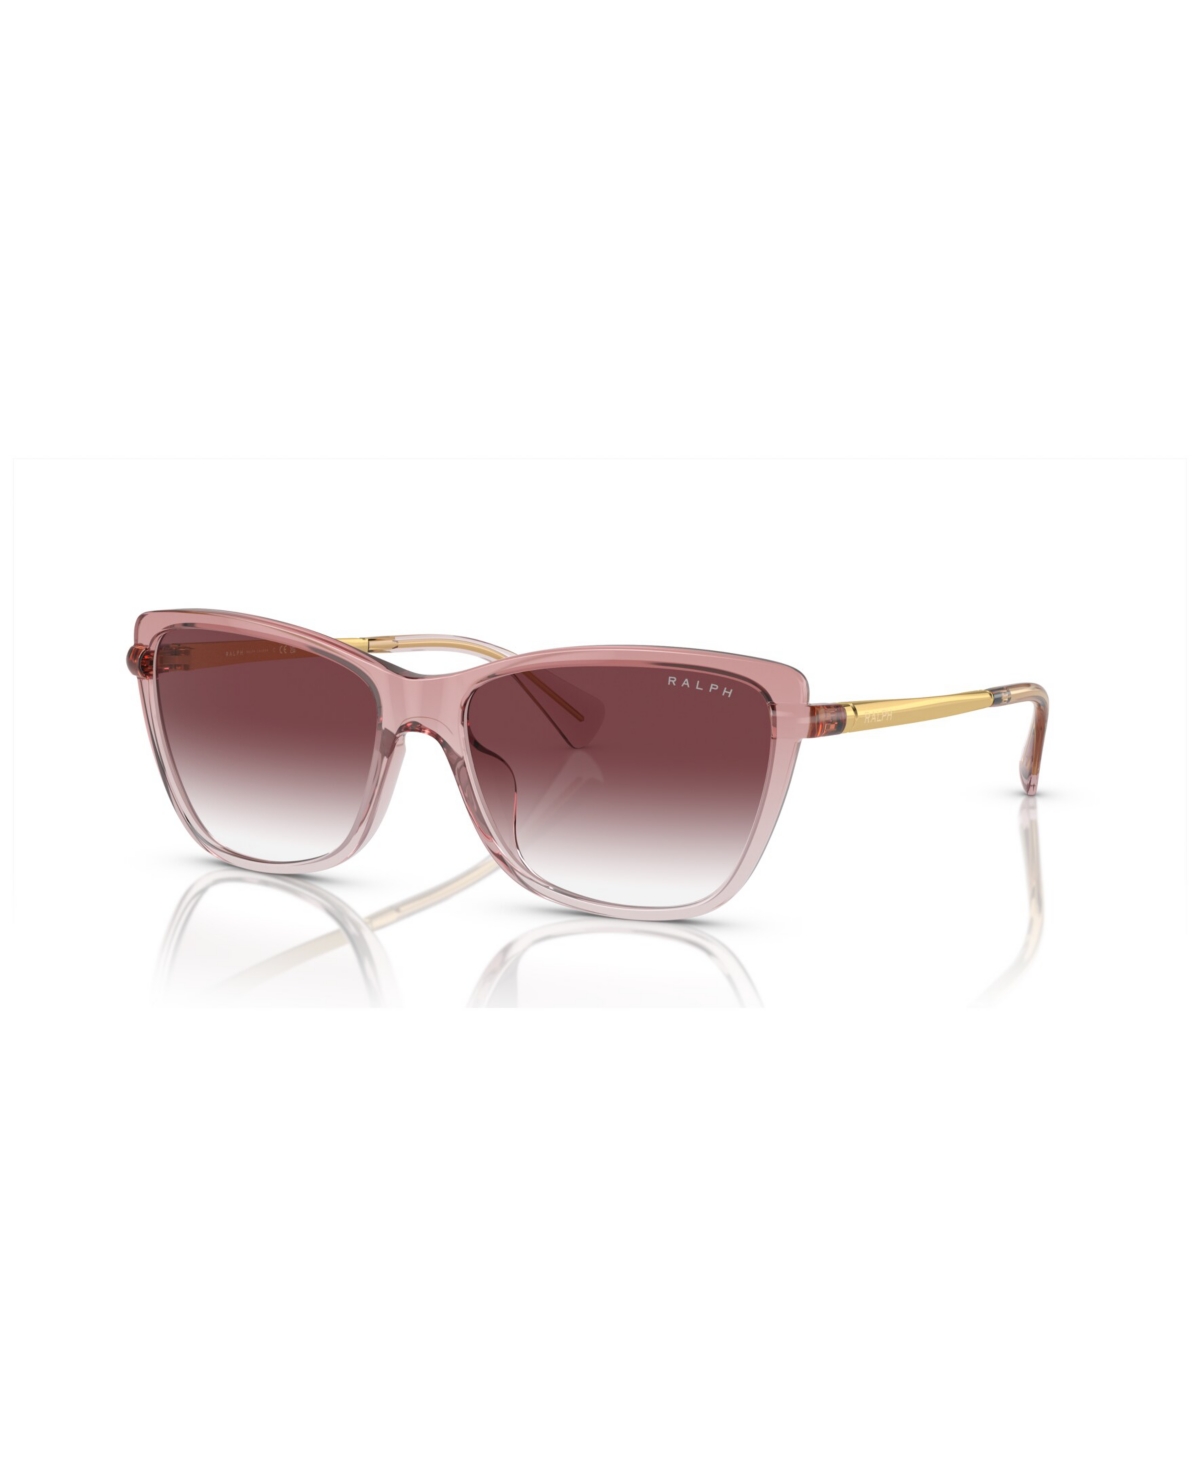 Women's Sunglasses, Gradient RA5308U - Shiny Transparent Rose